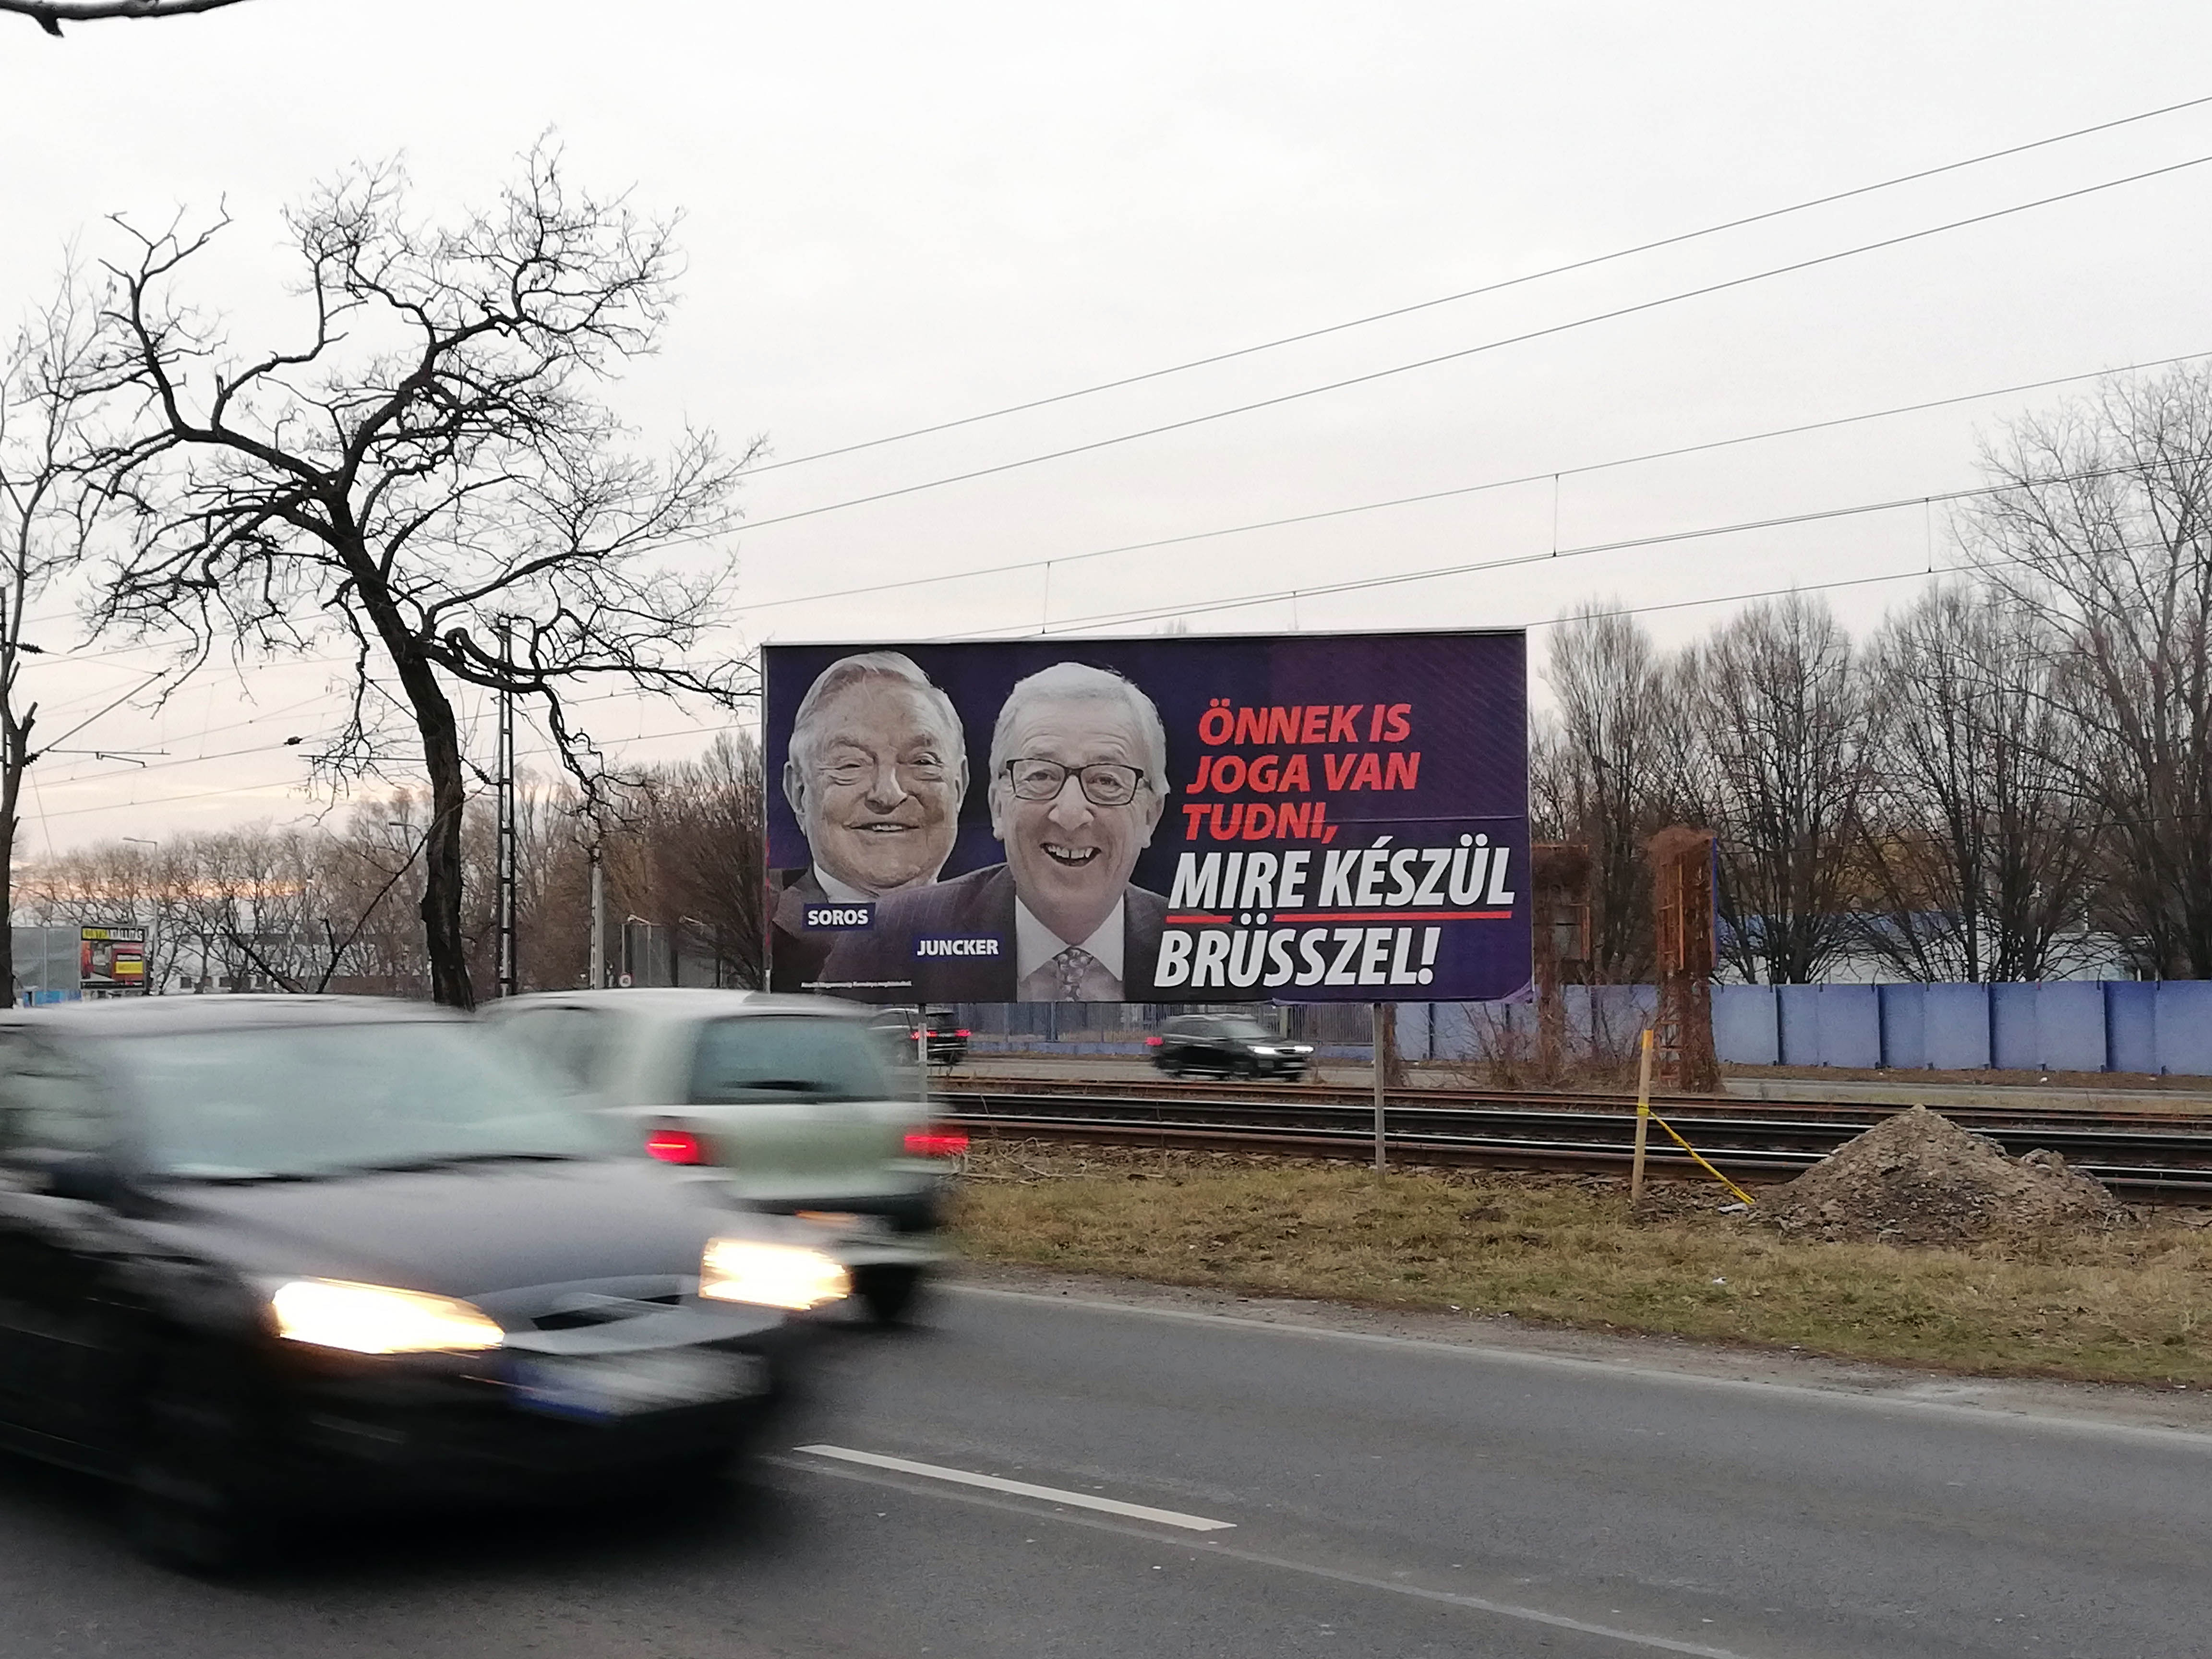 Soros Juncker EU Hungary billboards